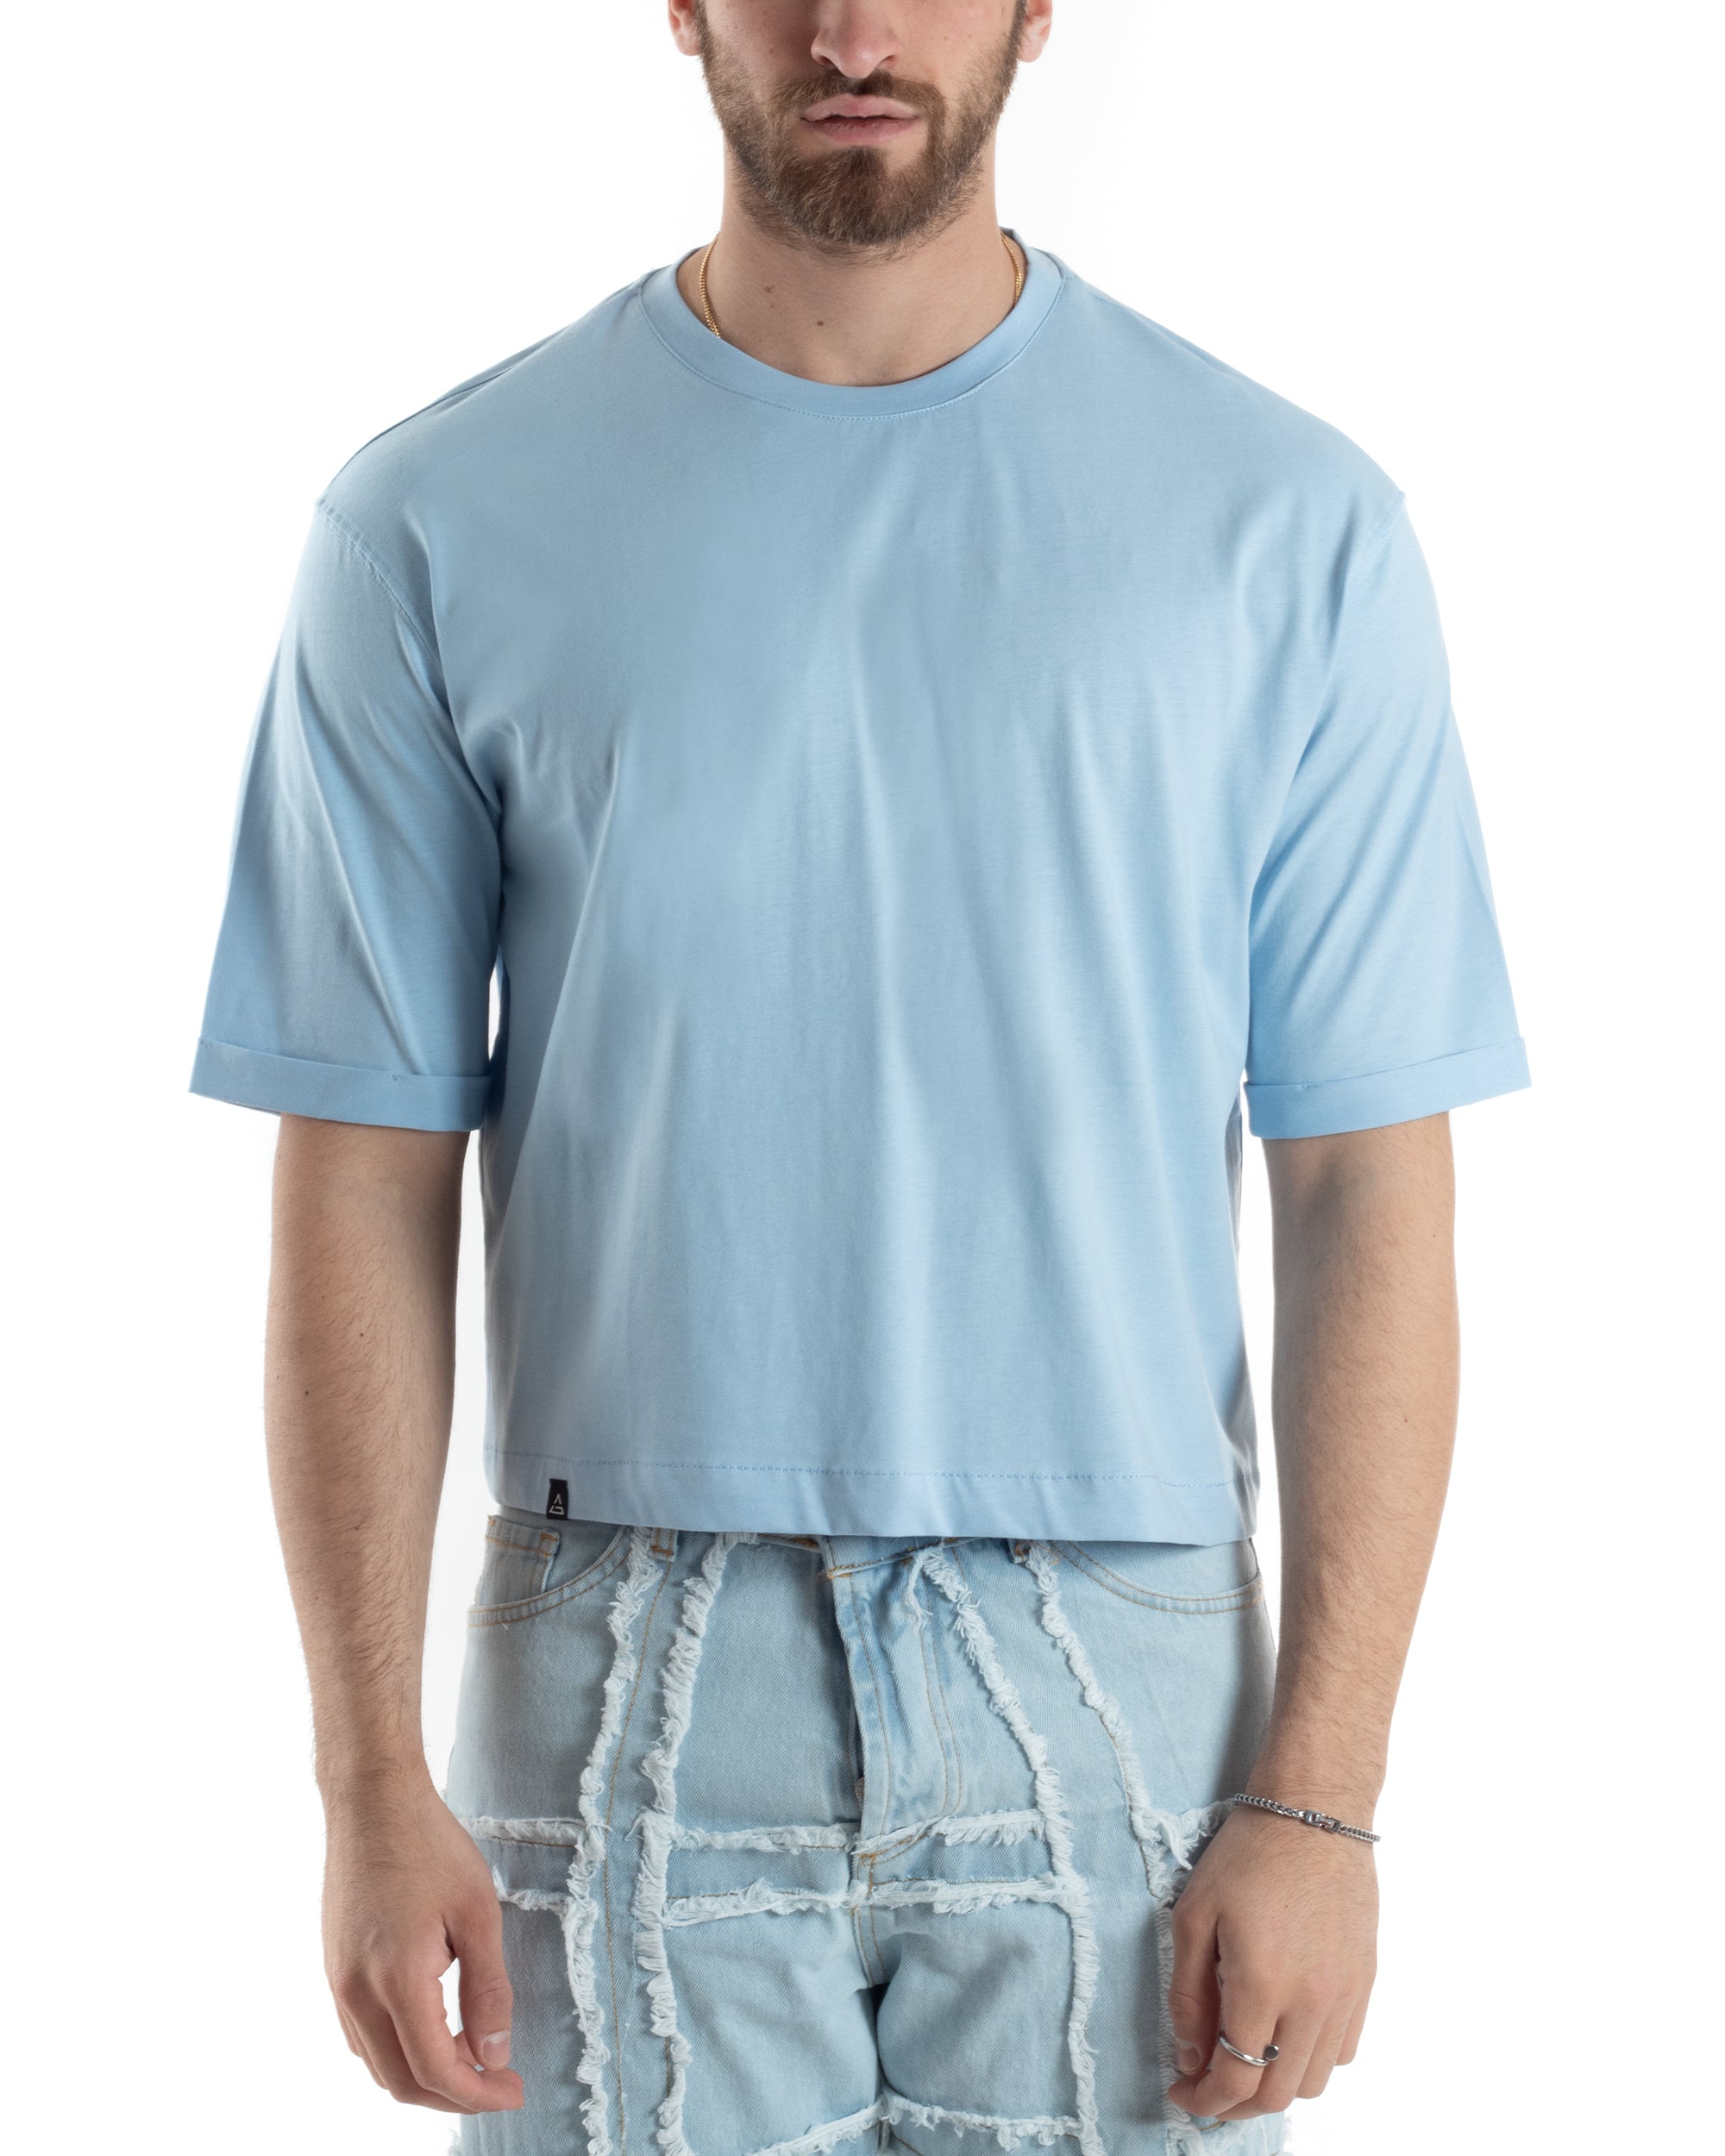 T-shirt Uomo Cropped Corta Boxy Fit Tinta Unita Celeste Casual GIOSAL-TS3006A